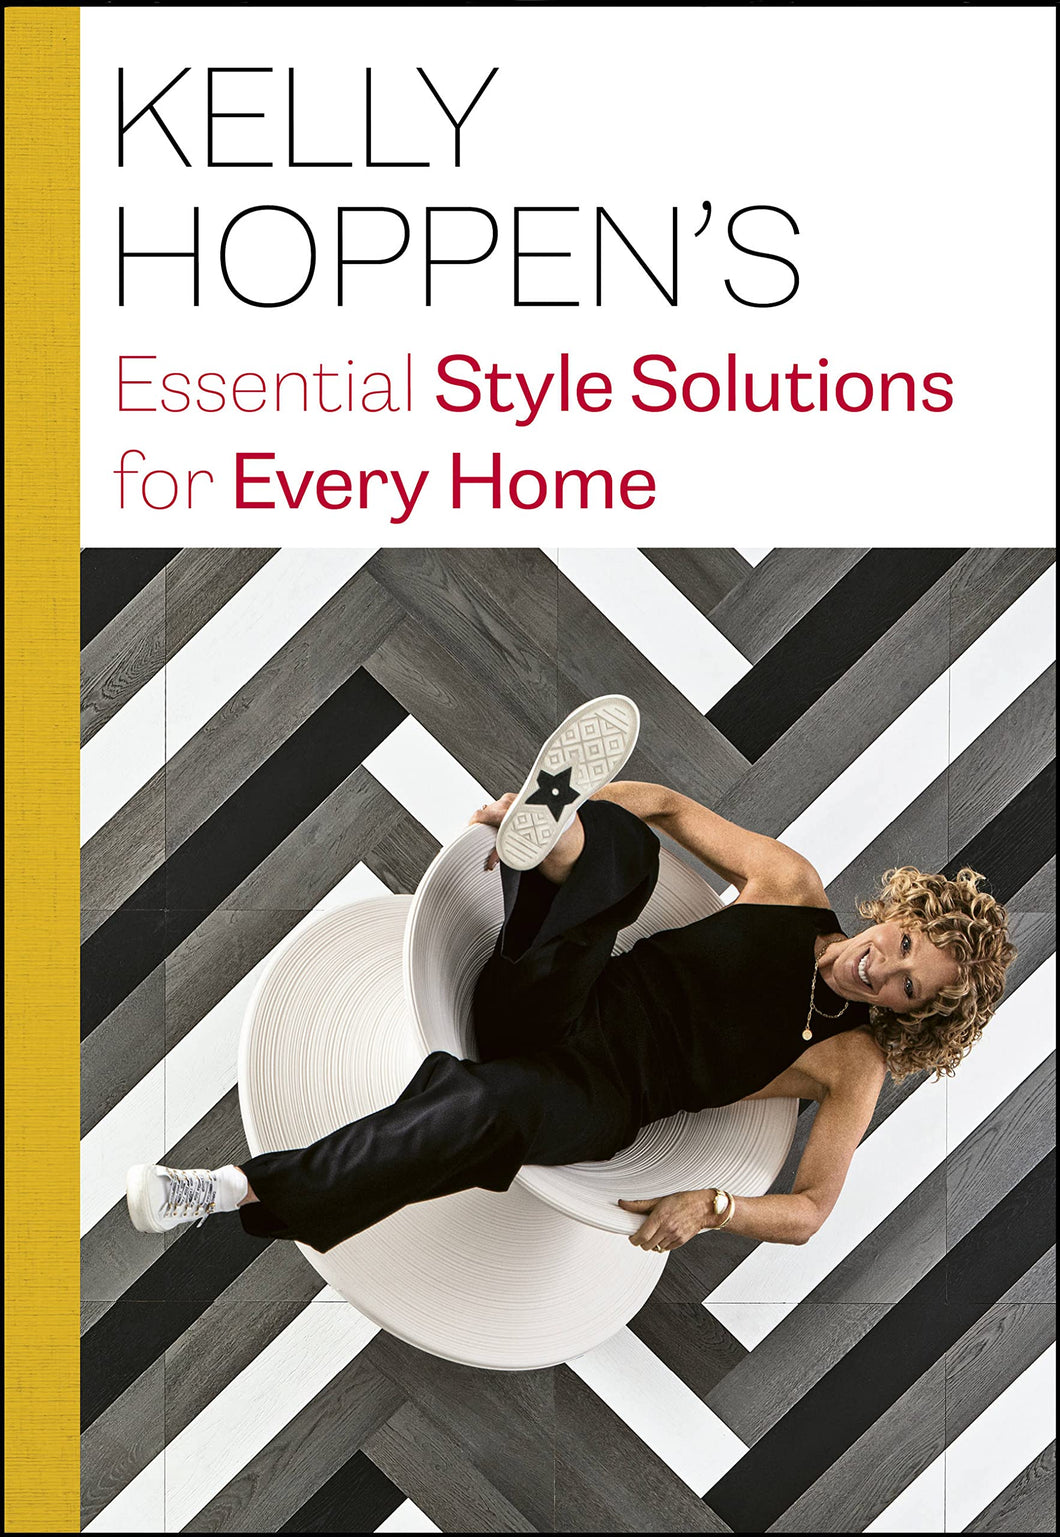 Book K. Hoppen's Essential Style